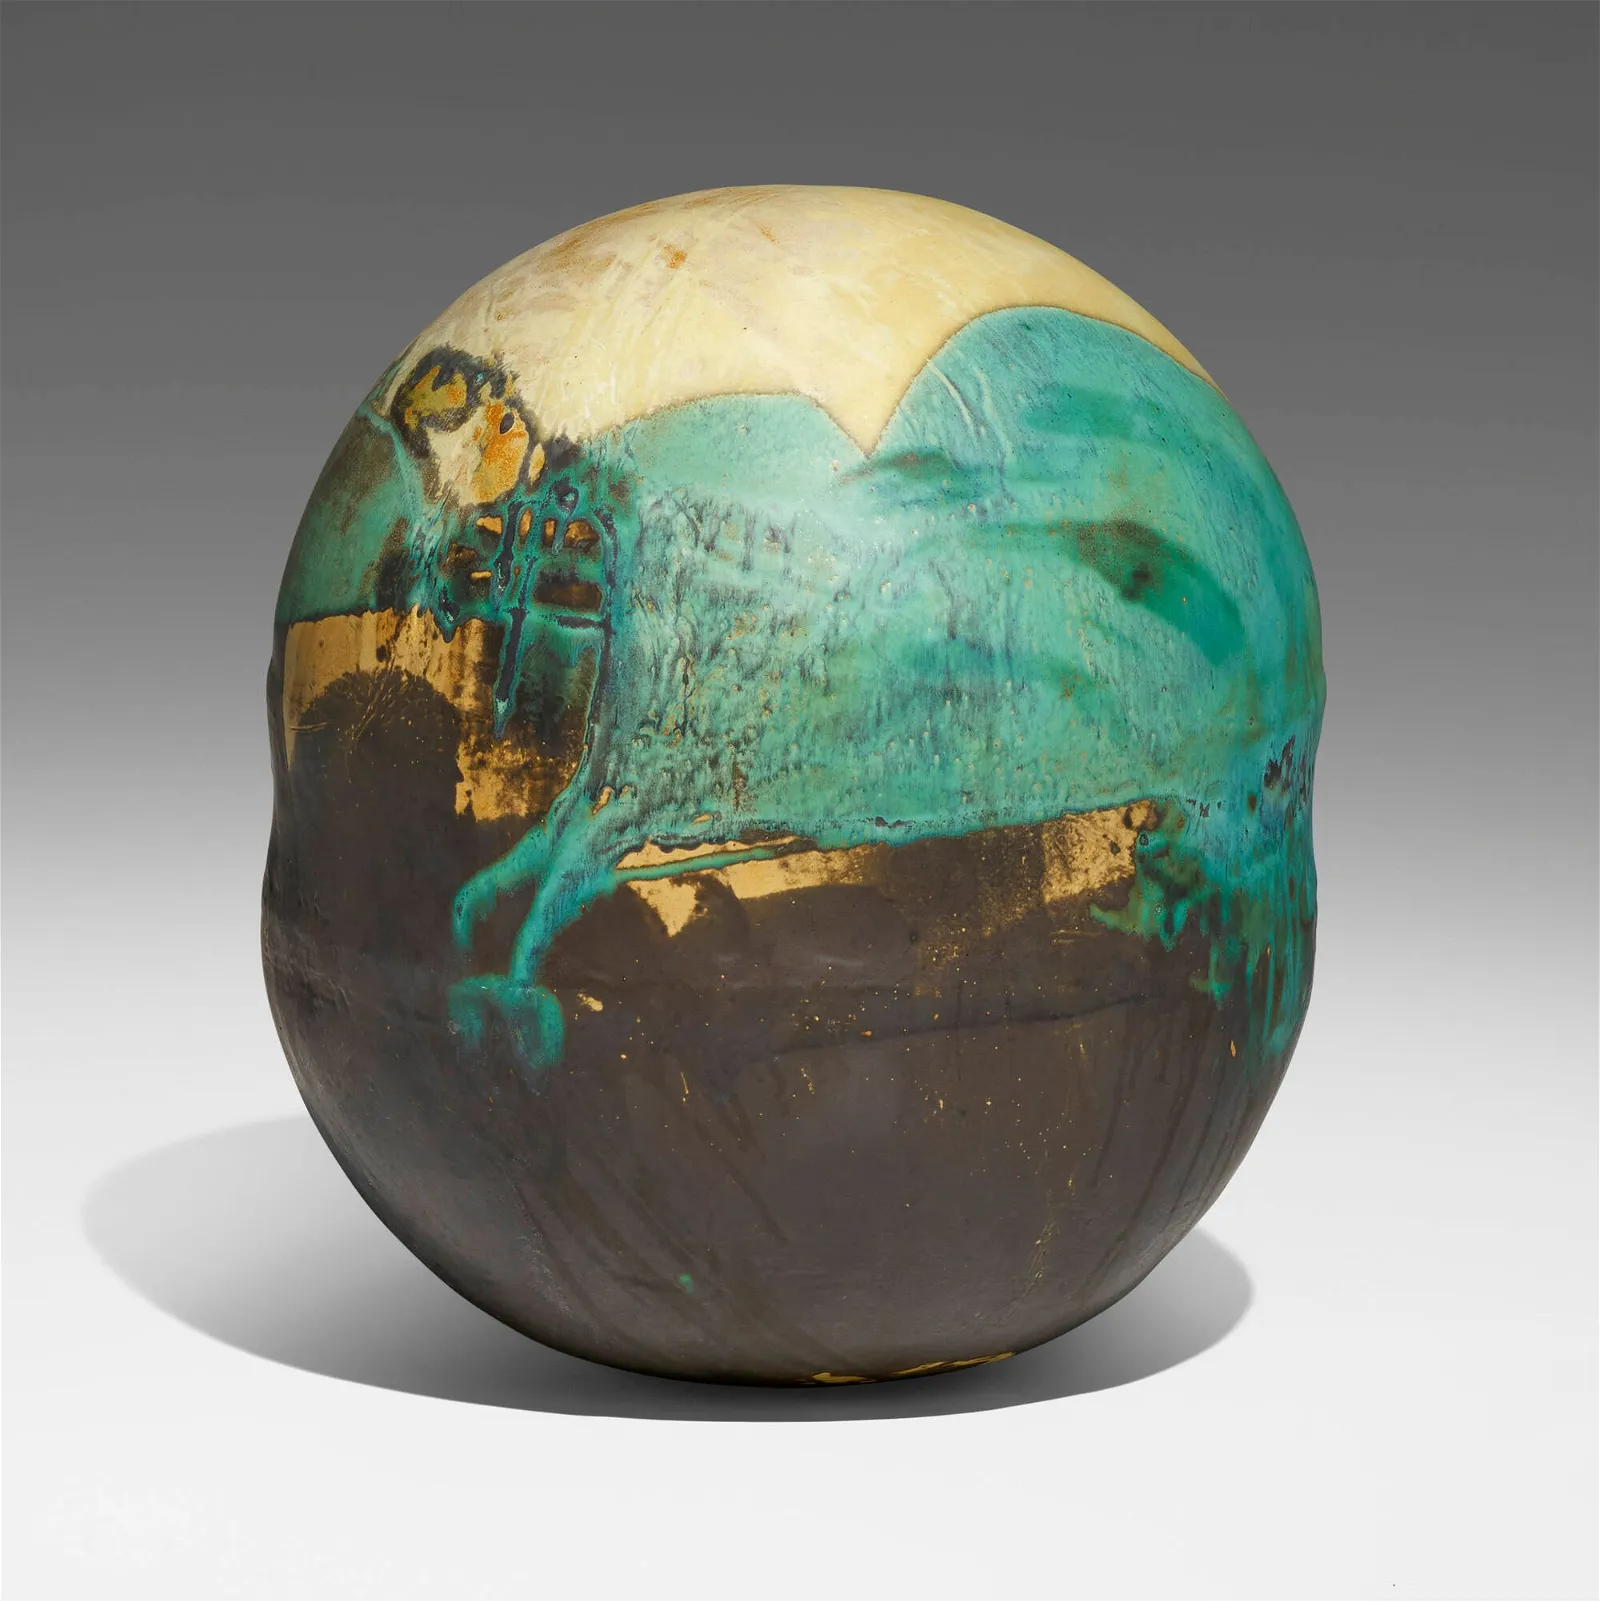 Toshiko Takaezu ceramics and Richard Marquis art glass shattered their estimates at Rago